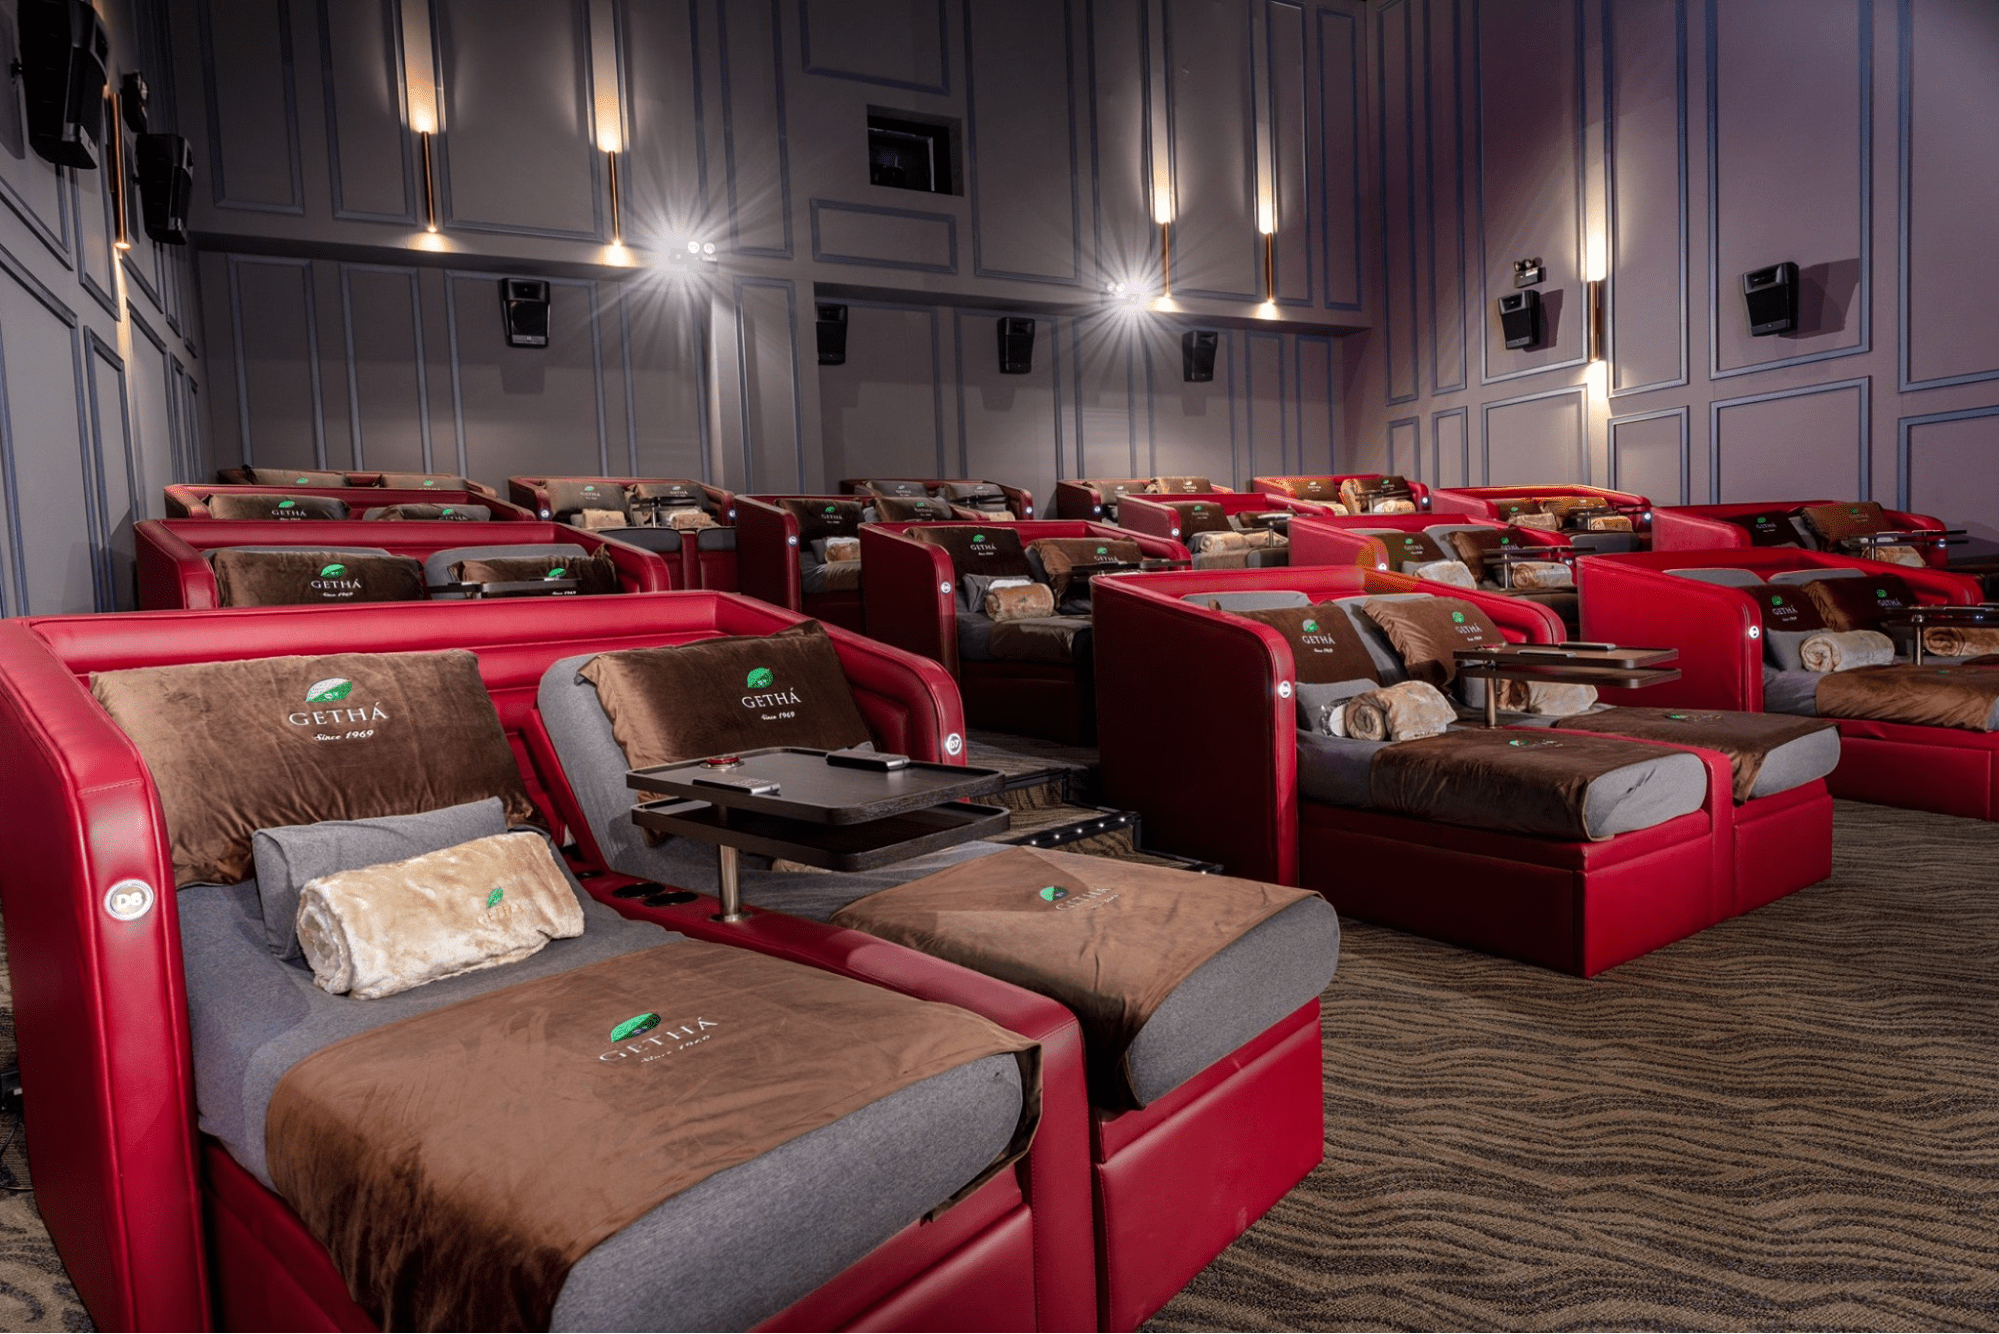 cinemas in jb - aurum theatre suites